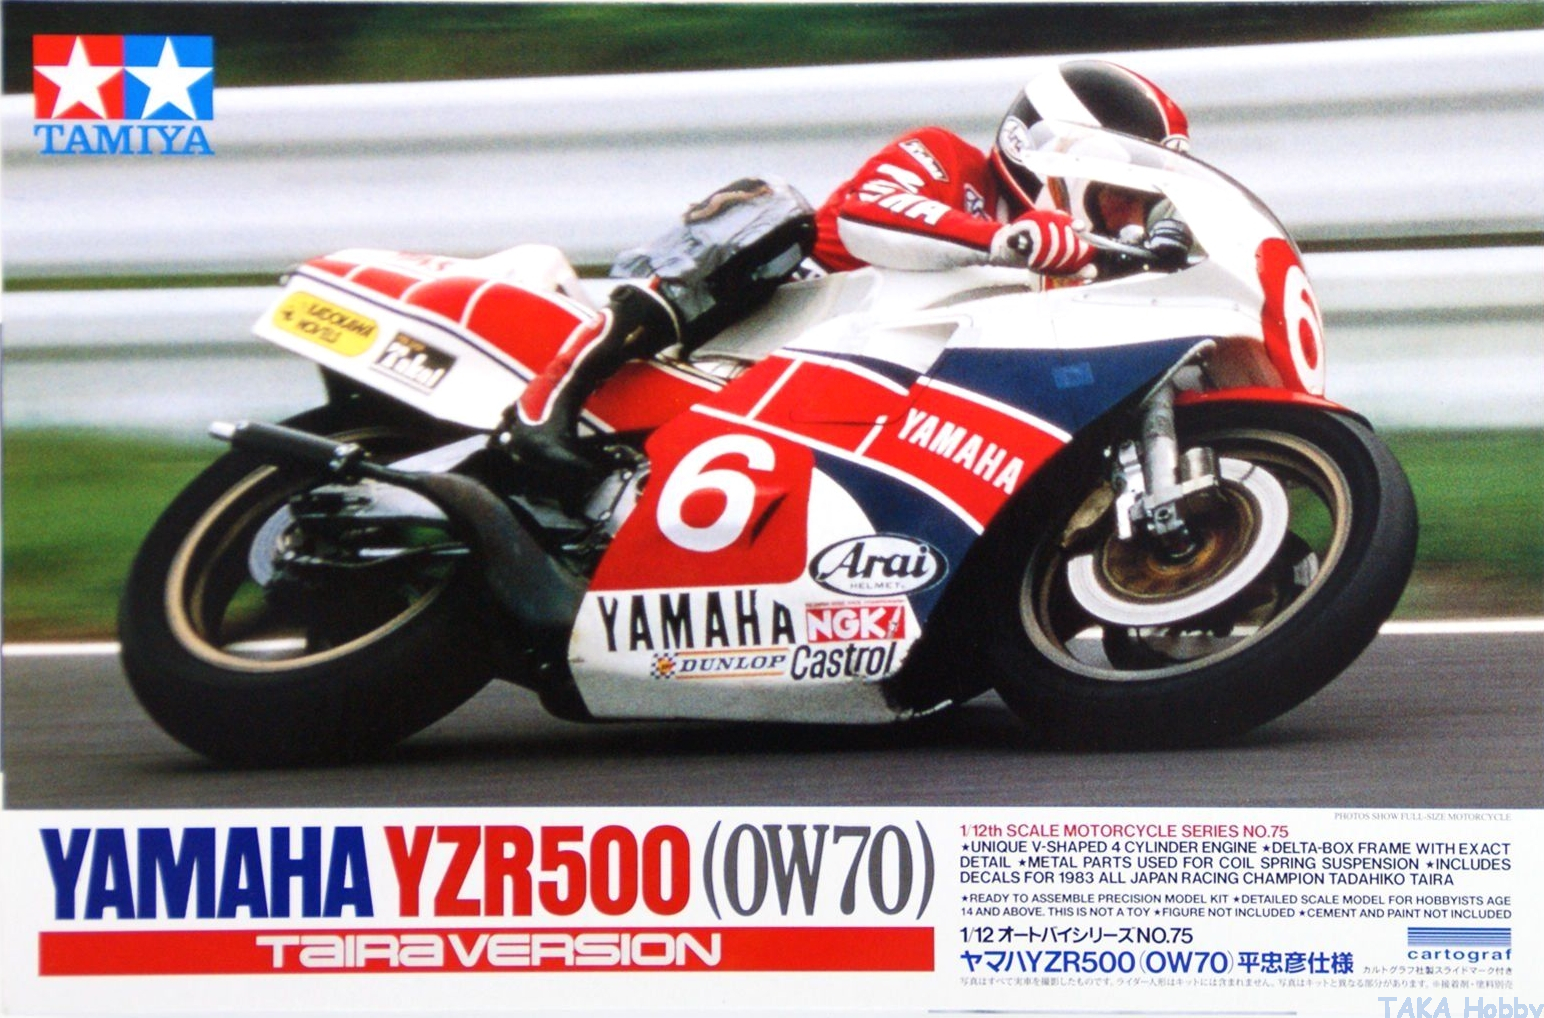 Tamiya 14075 1/12 Yamaha Yzr500 Taira Version Motorcycle for sale online 